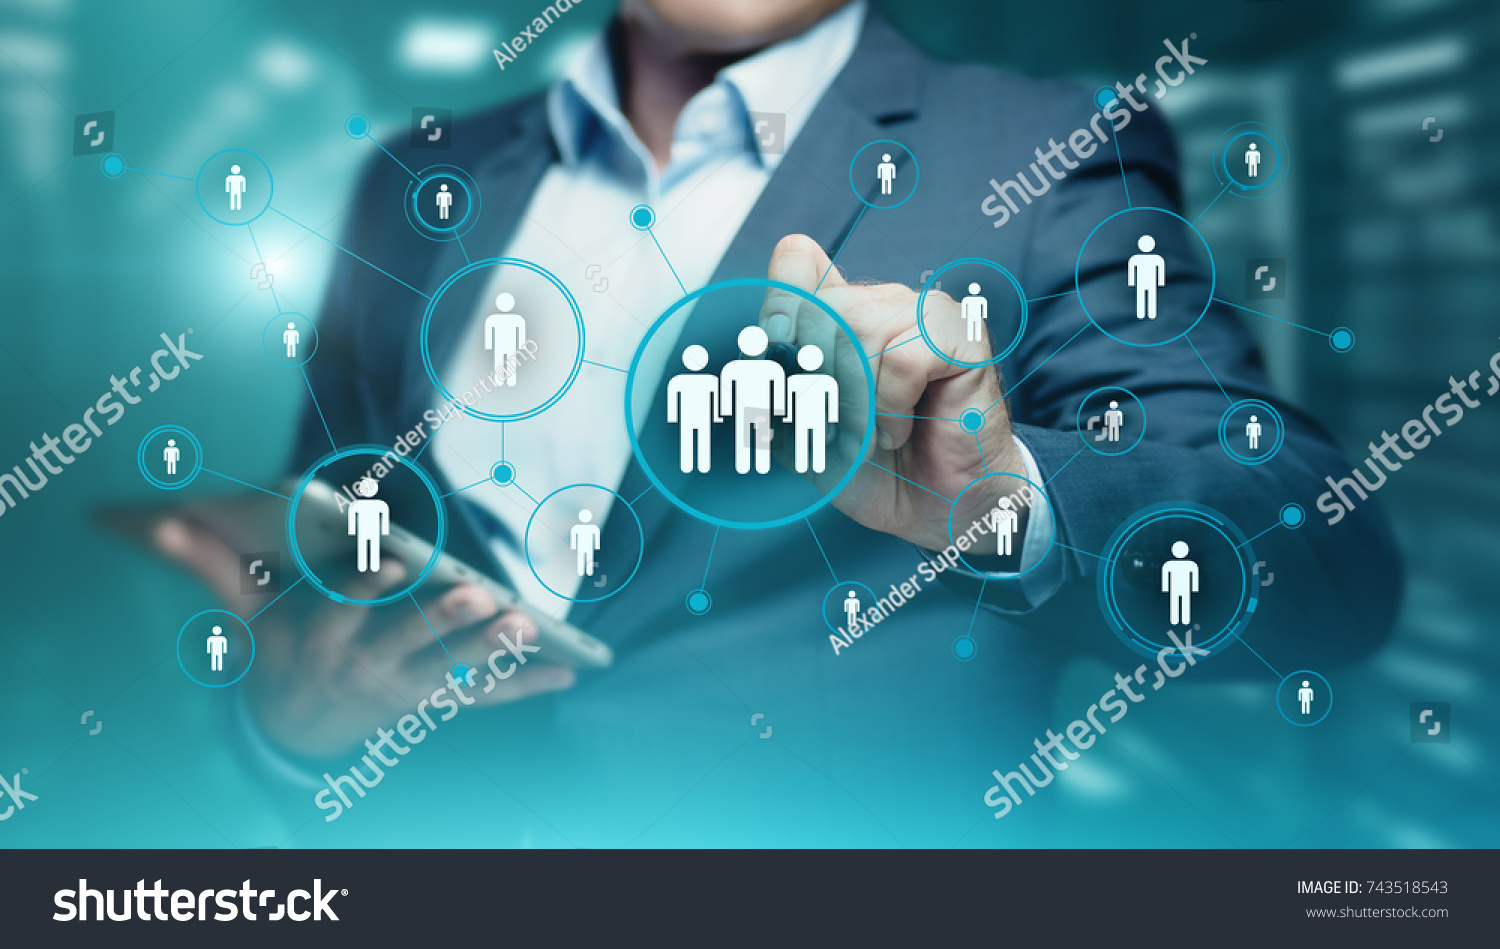 Human Resources HR management Recruitment Employment Headhunting Concept. #743518543